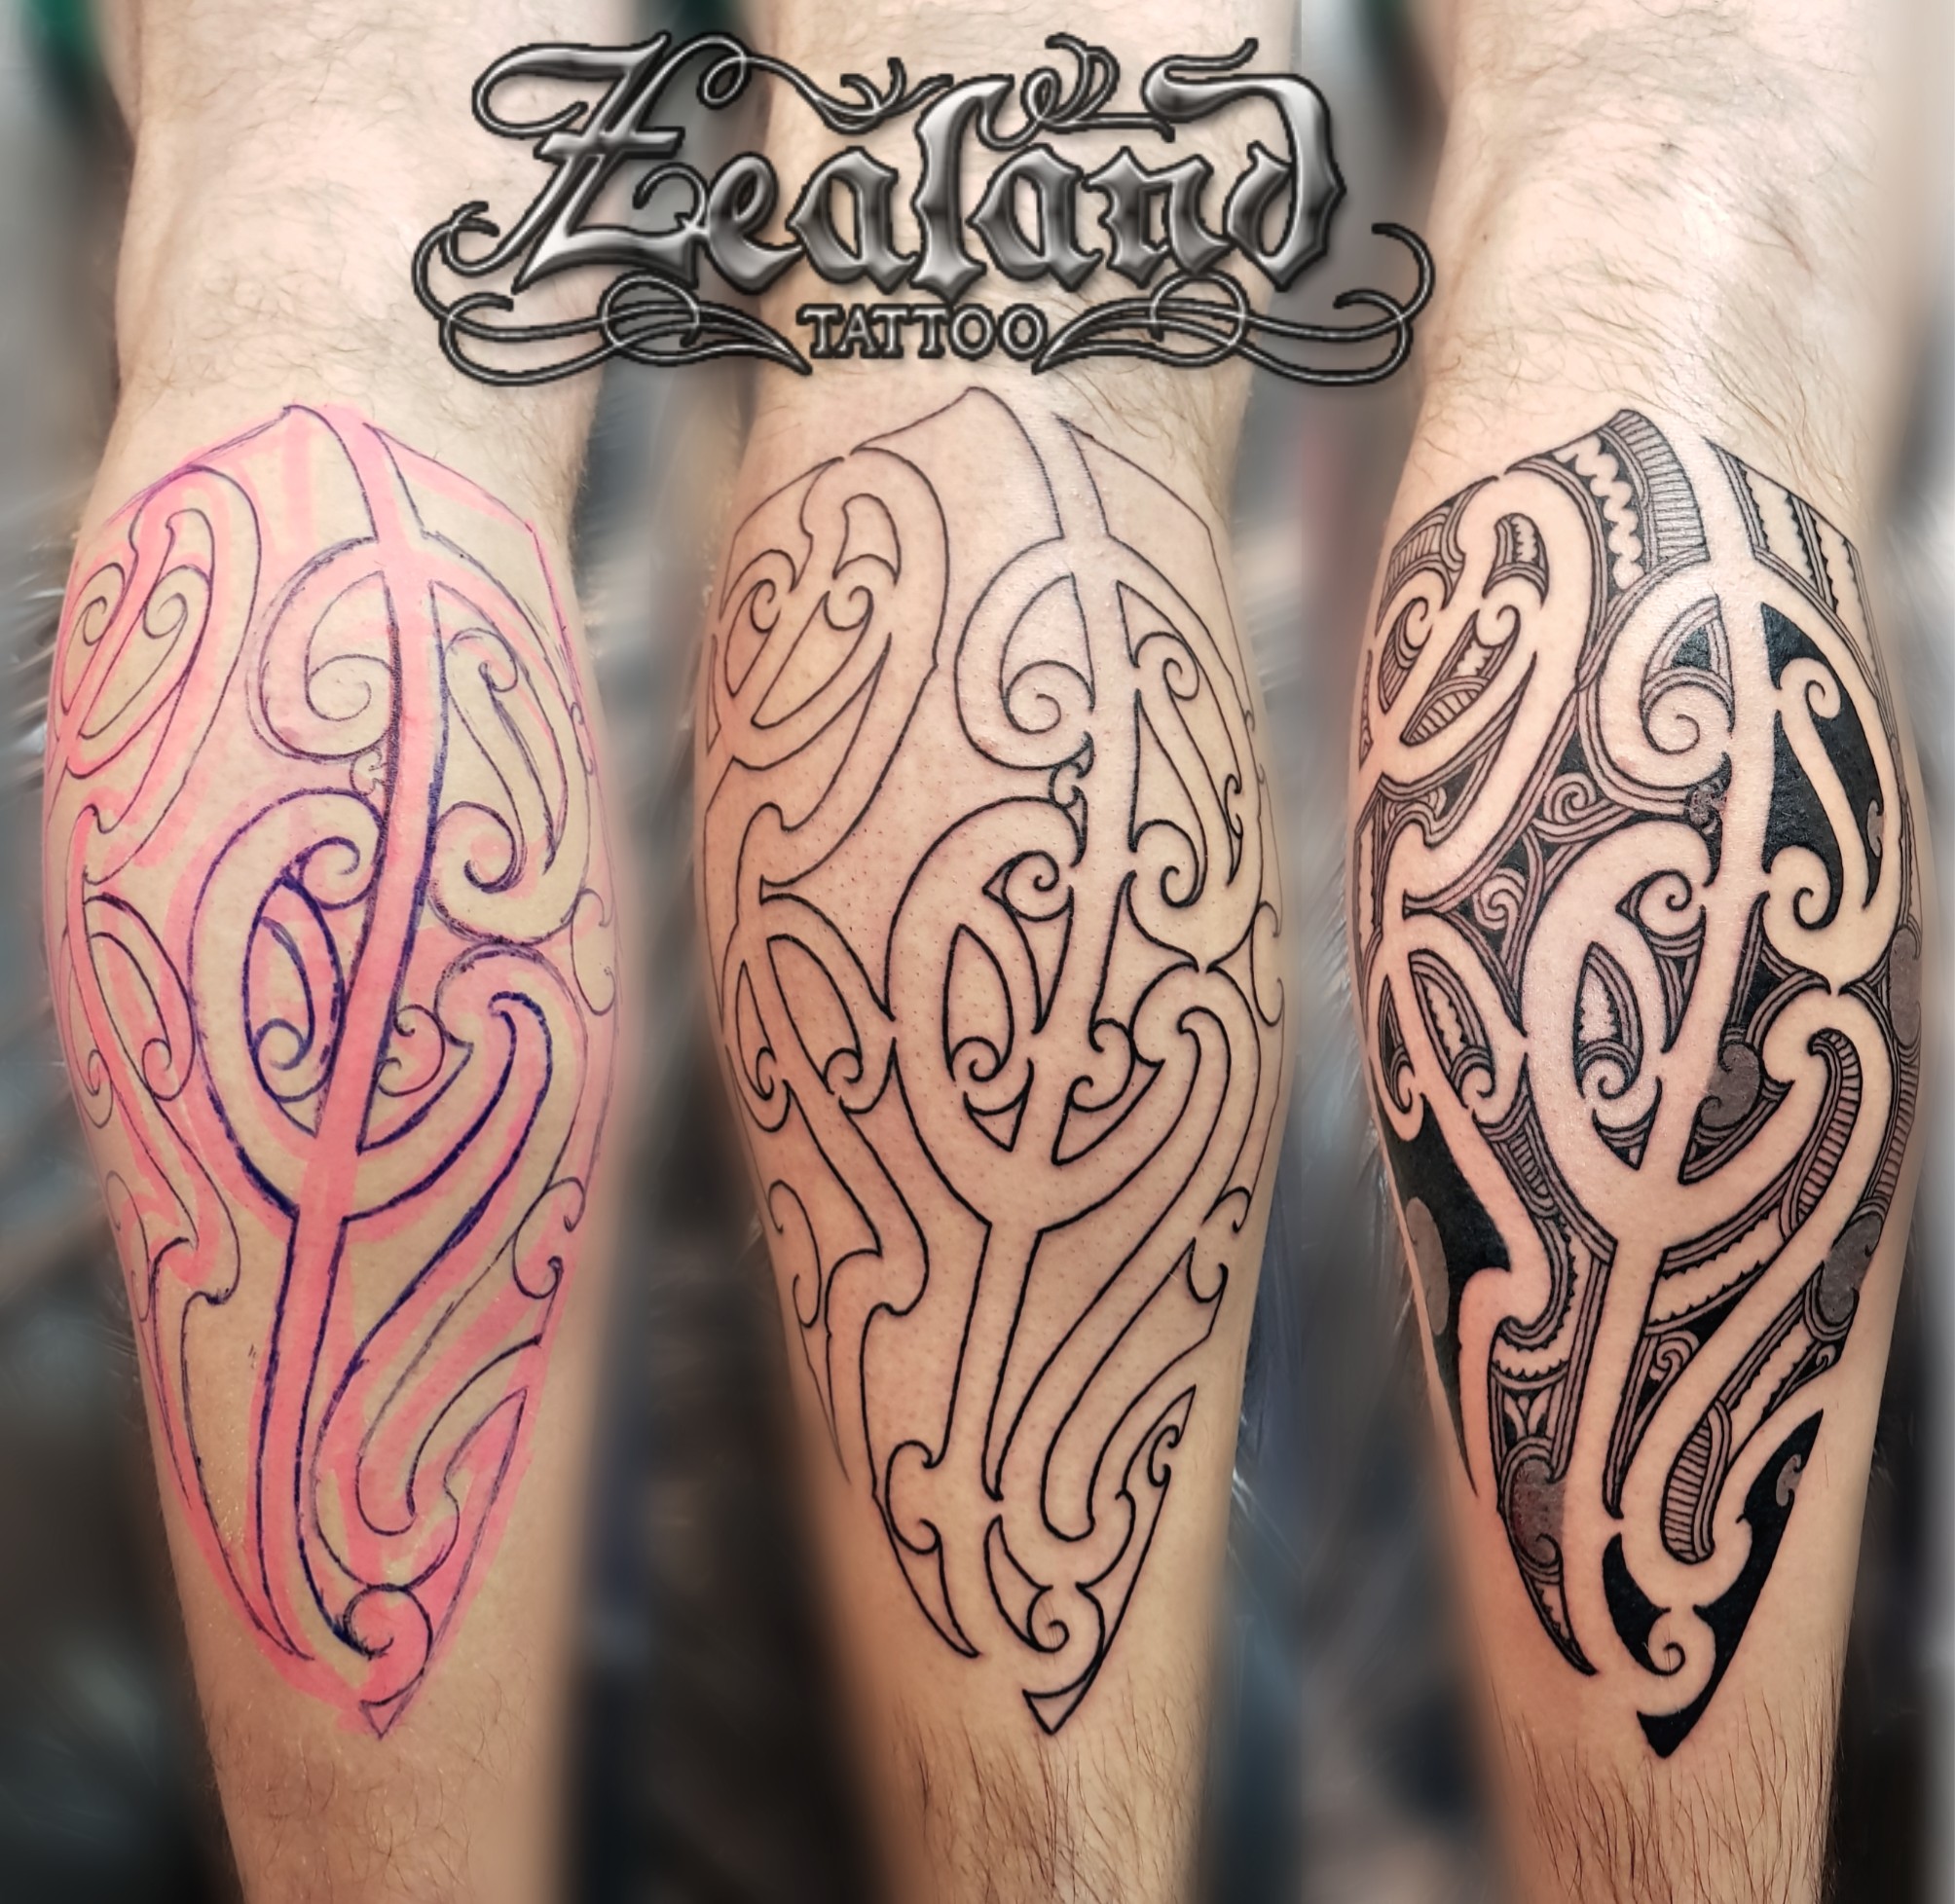 Sasi Wins tattoos - Double Name letter font tattoo, MAHI and GAYU please  rotate 180 degree Angle | Facebook